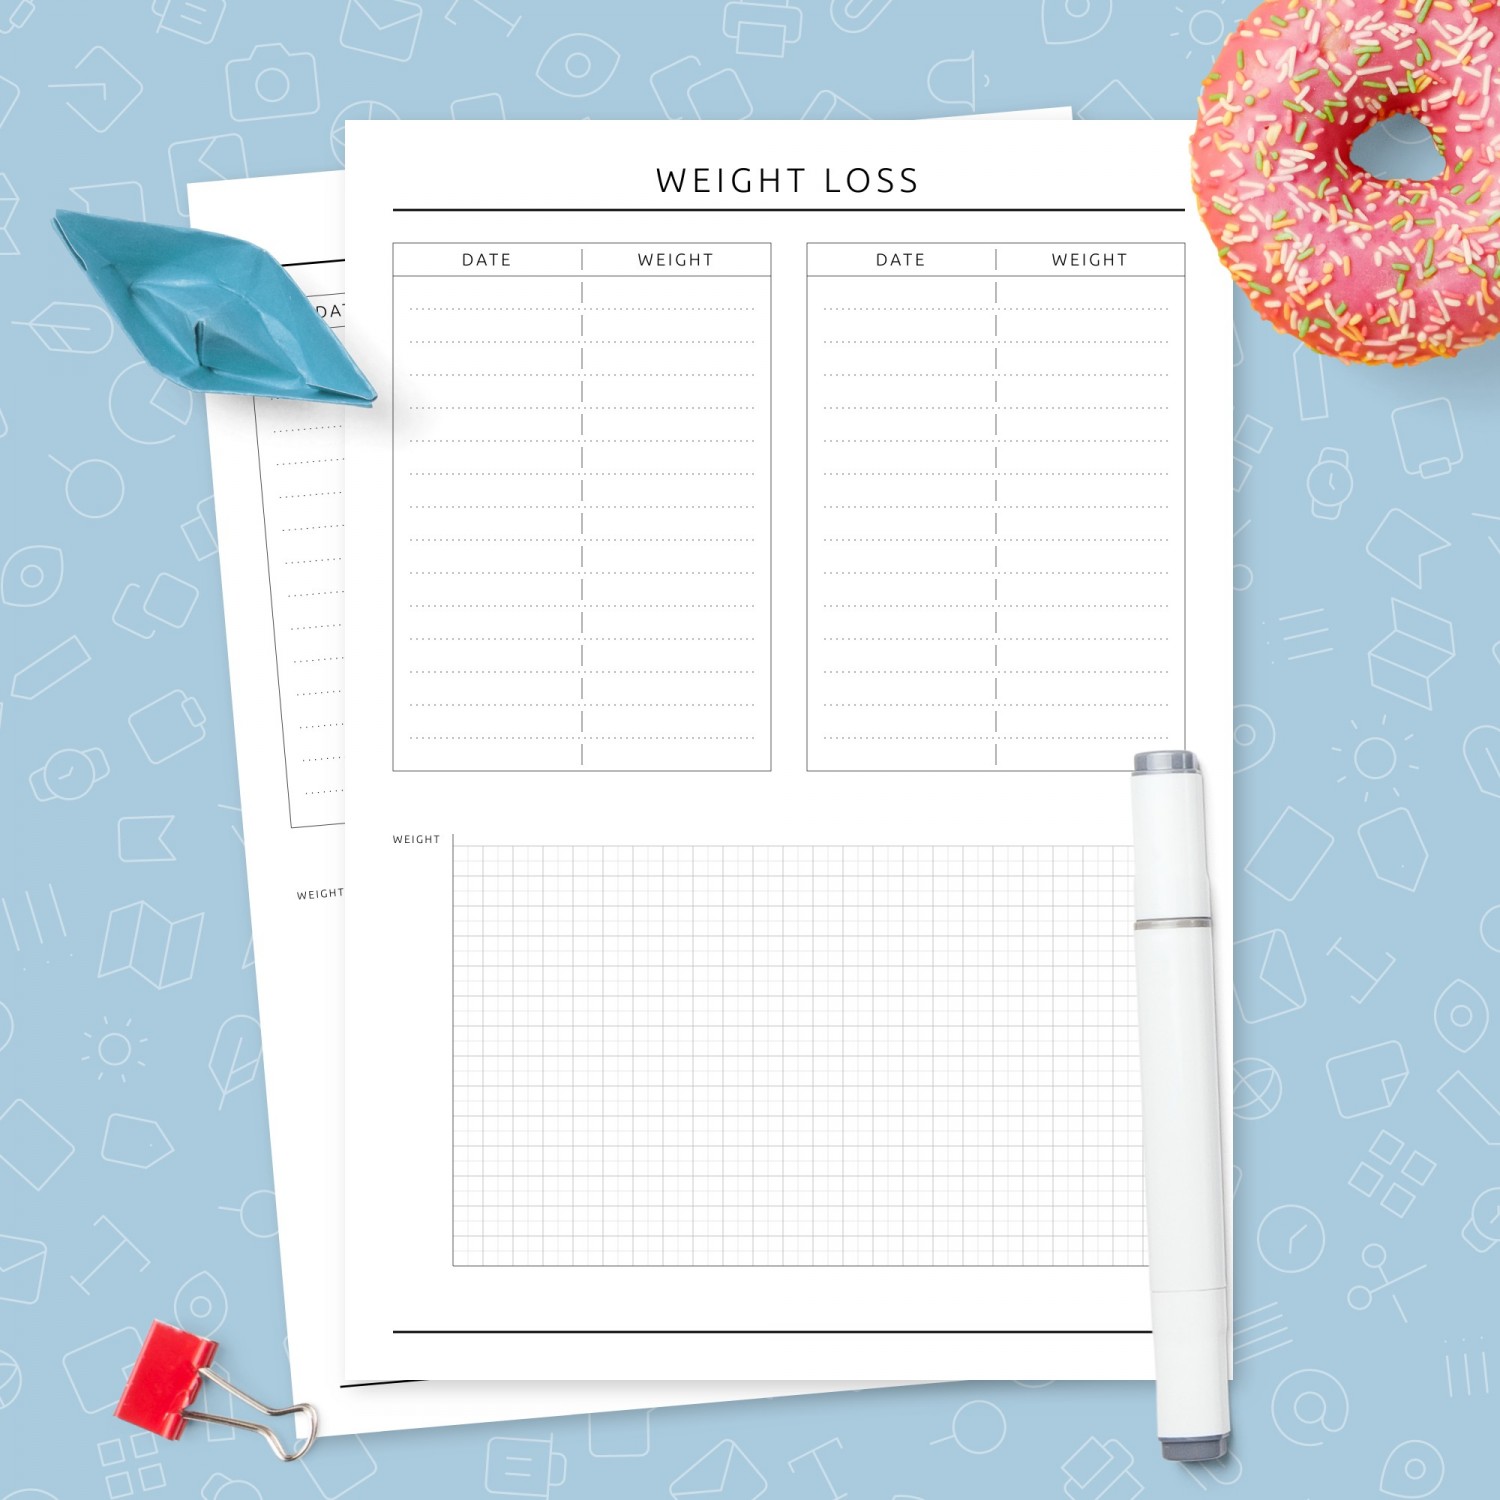 2020 weight loss tracker template